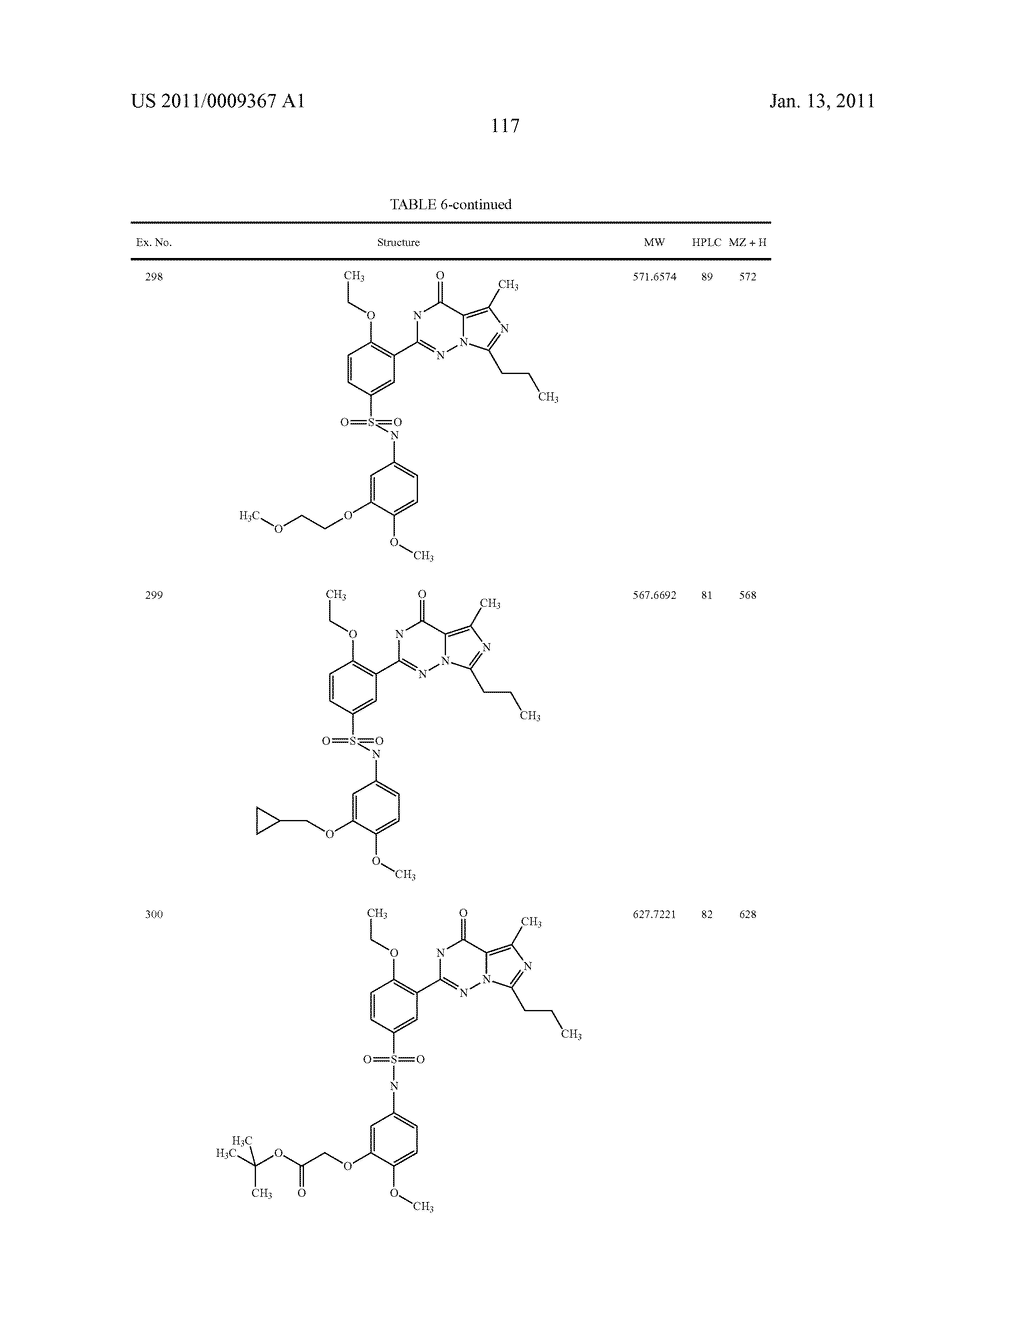 2-PHENYL SUBSTITUTED IMIDAZOTRIAZINONES AS PHOSPHODIESTERASE INHIBITORS - diagram, schematic, and image 118